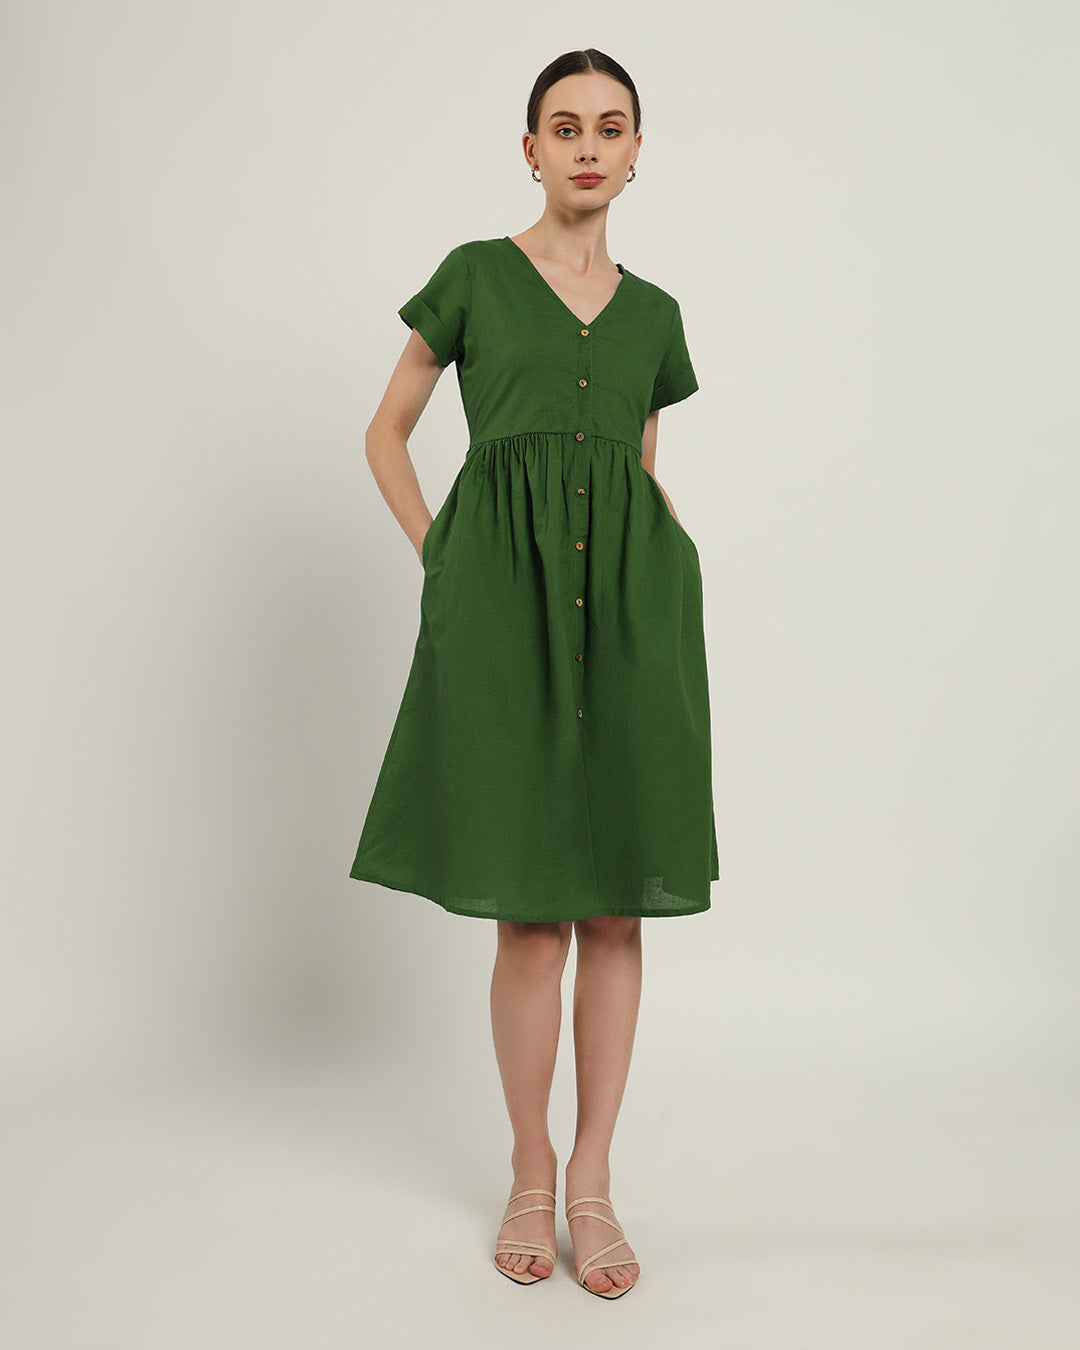 The Valence Emerald Dress